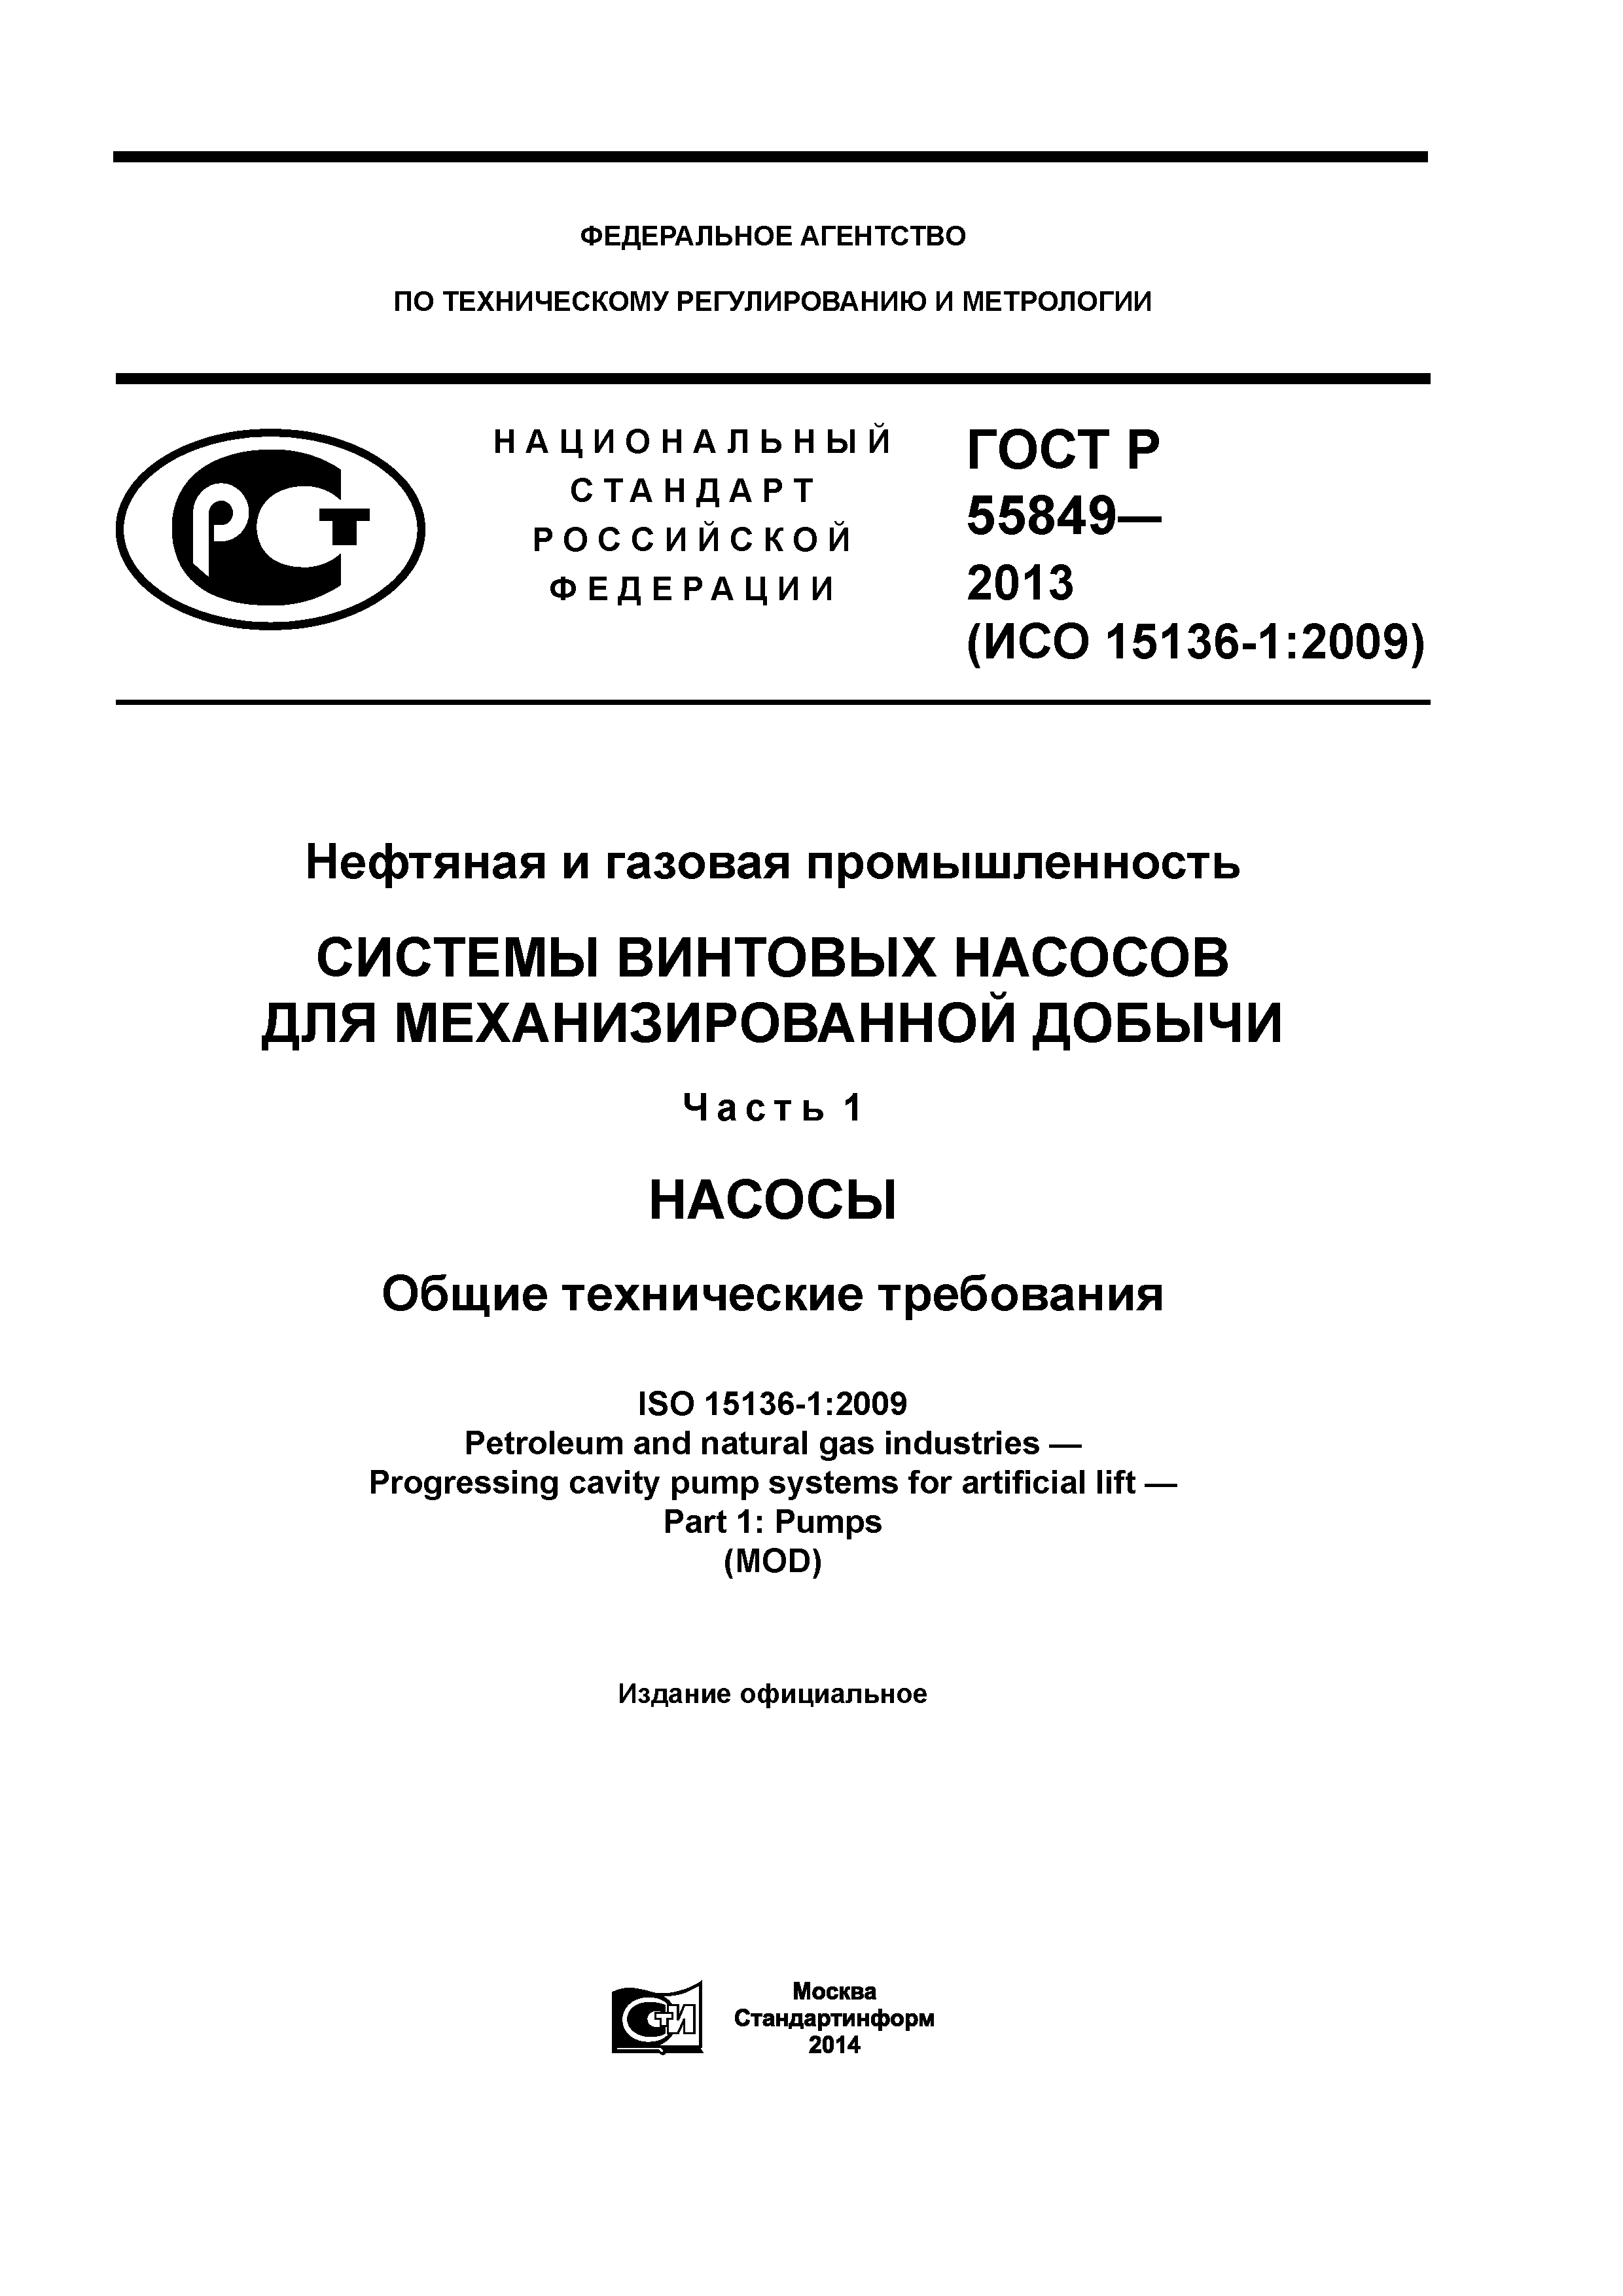 ГОСТ Р 55849-2013